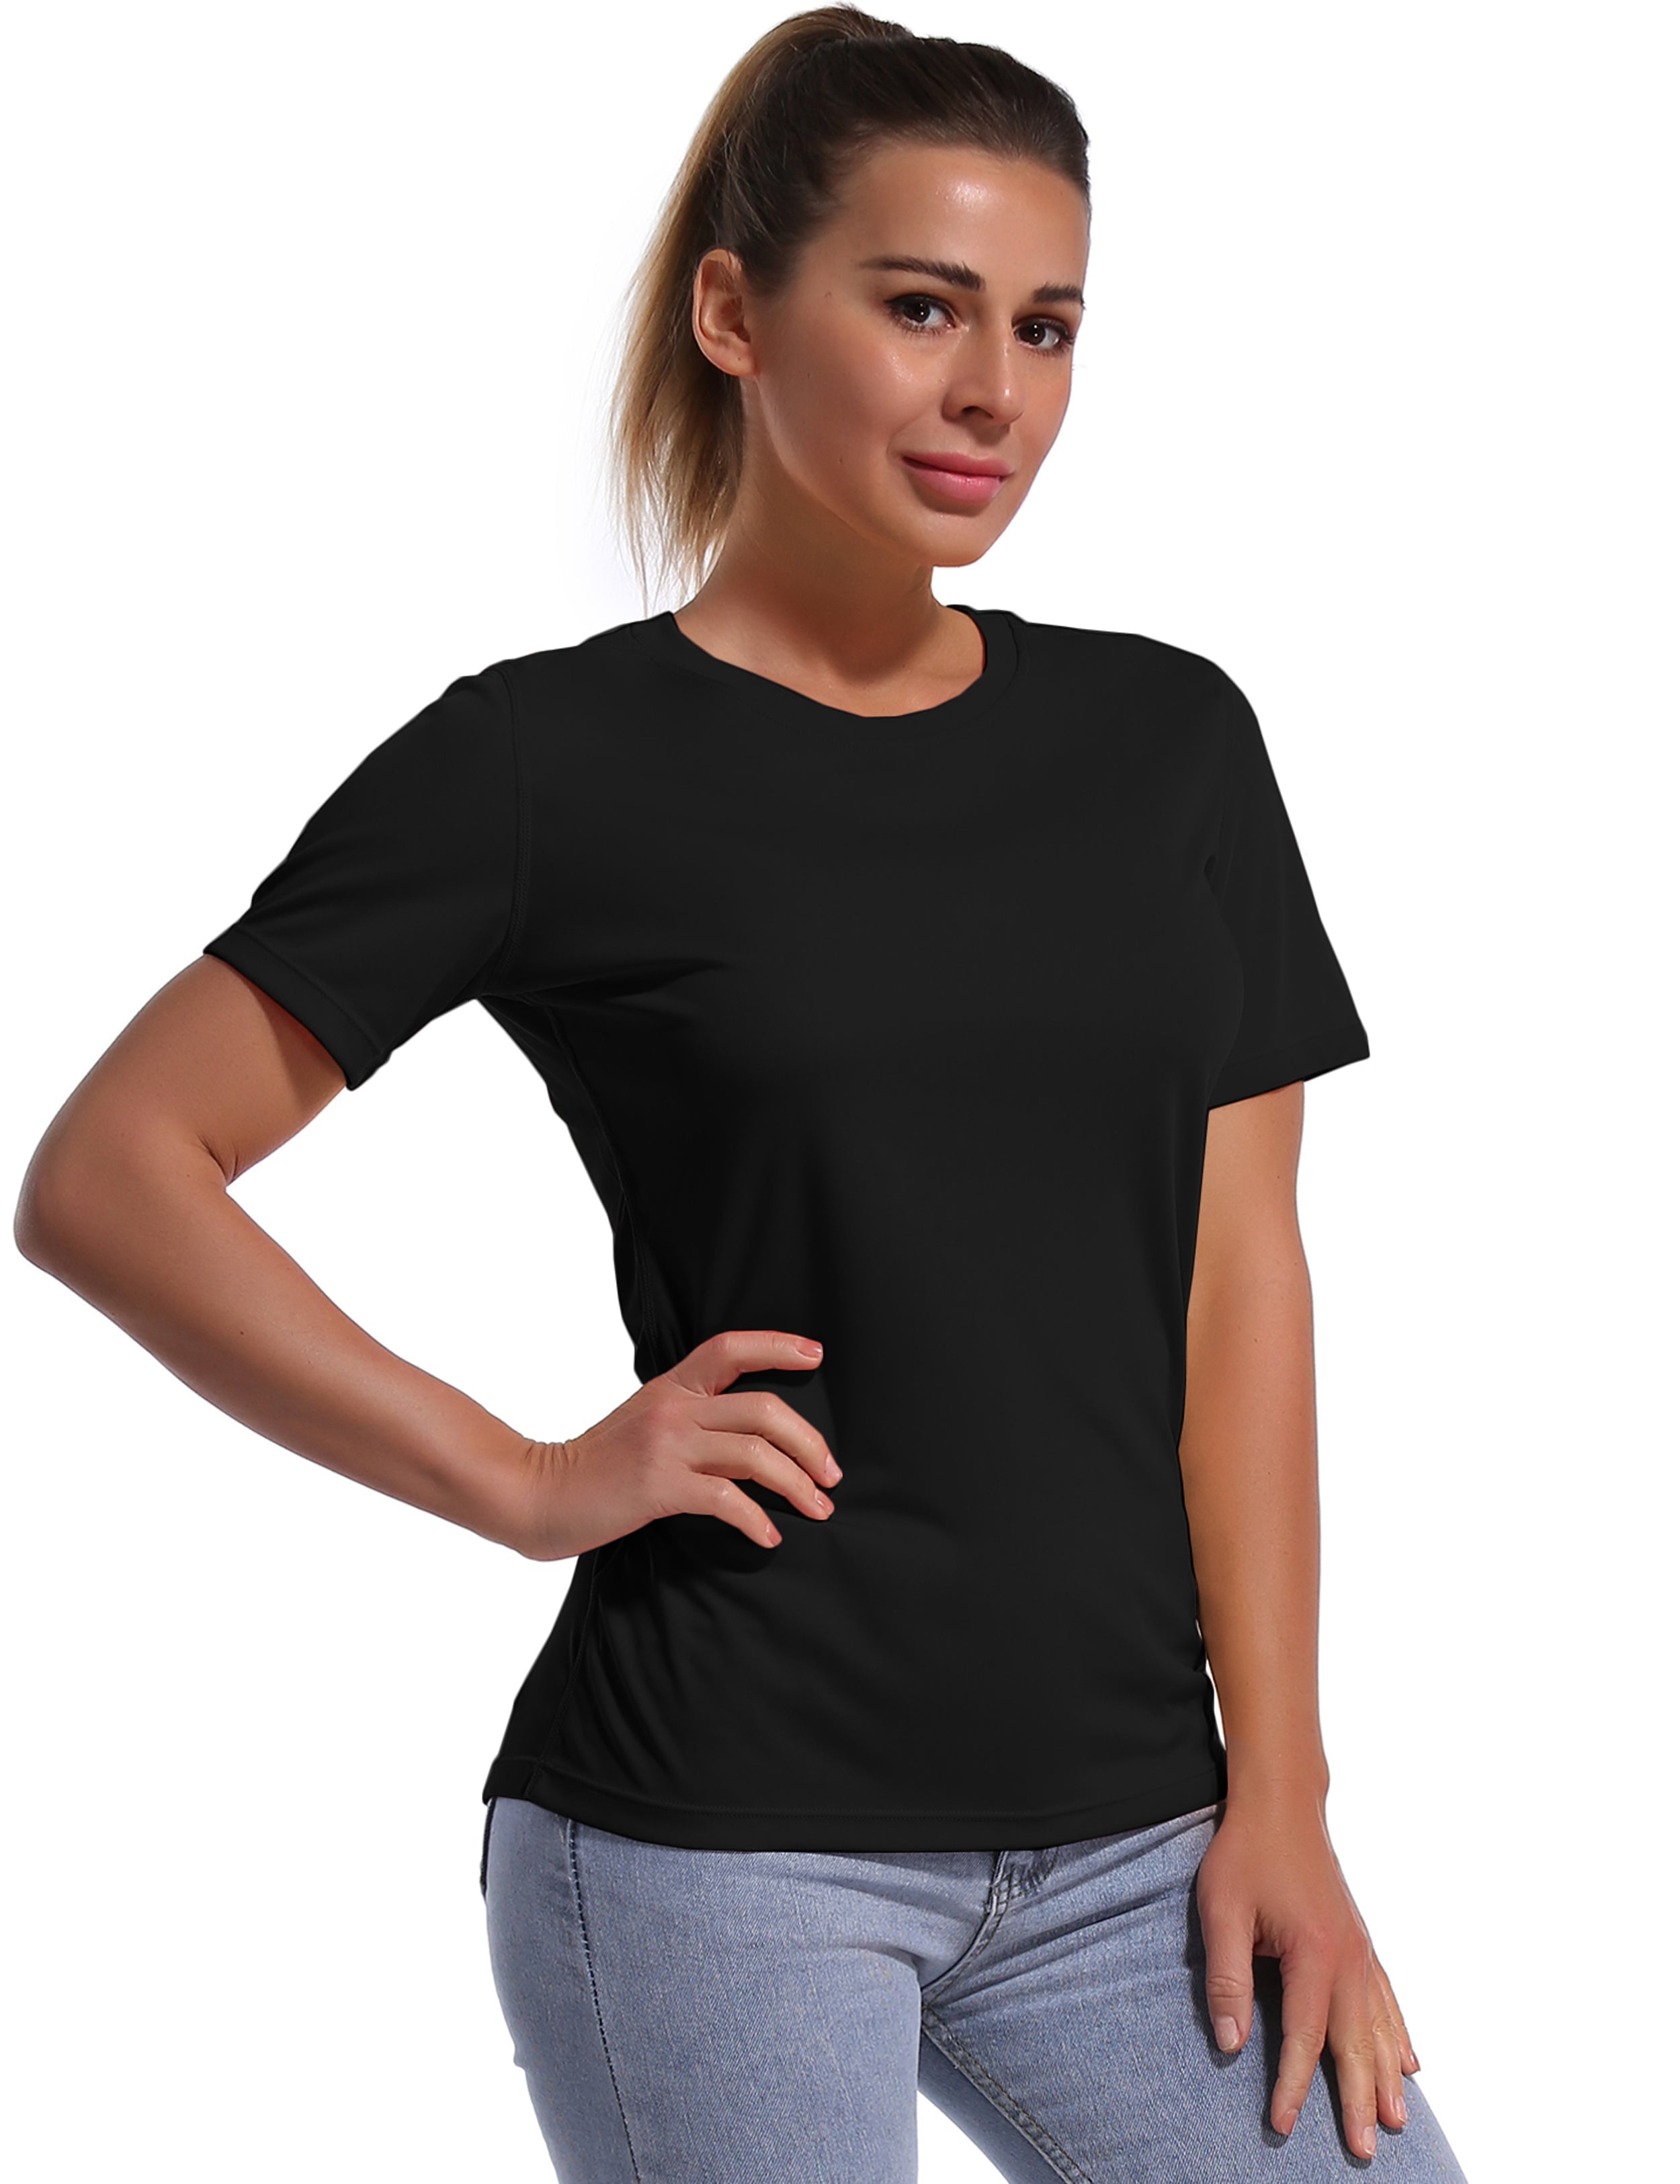 Short Sleeve Athletic Shirts black 100% polyester Lightweight Slim Fit UPF 50+ blocks sun's harmful rays Treated to wick moisture, dries ultra-fast